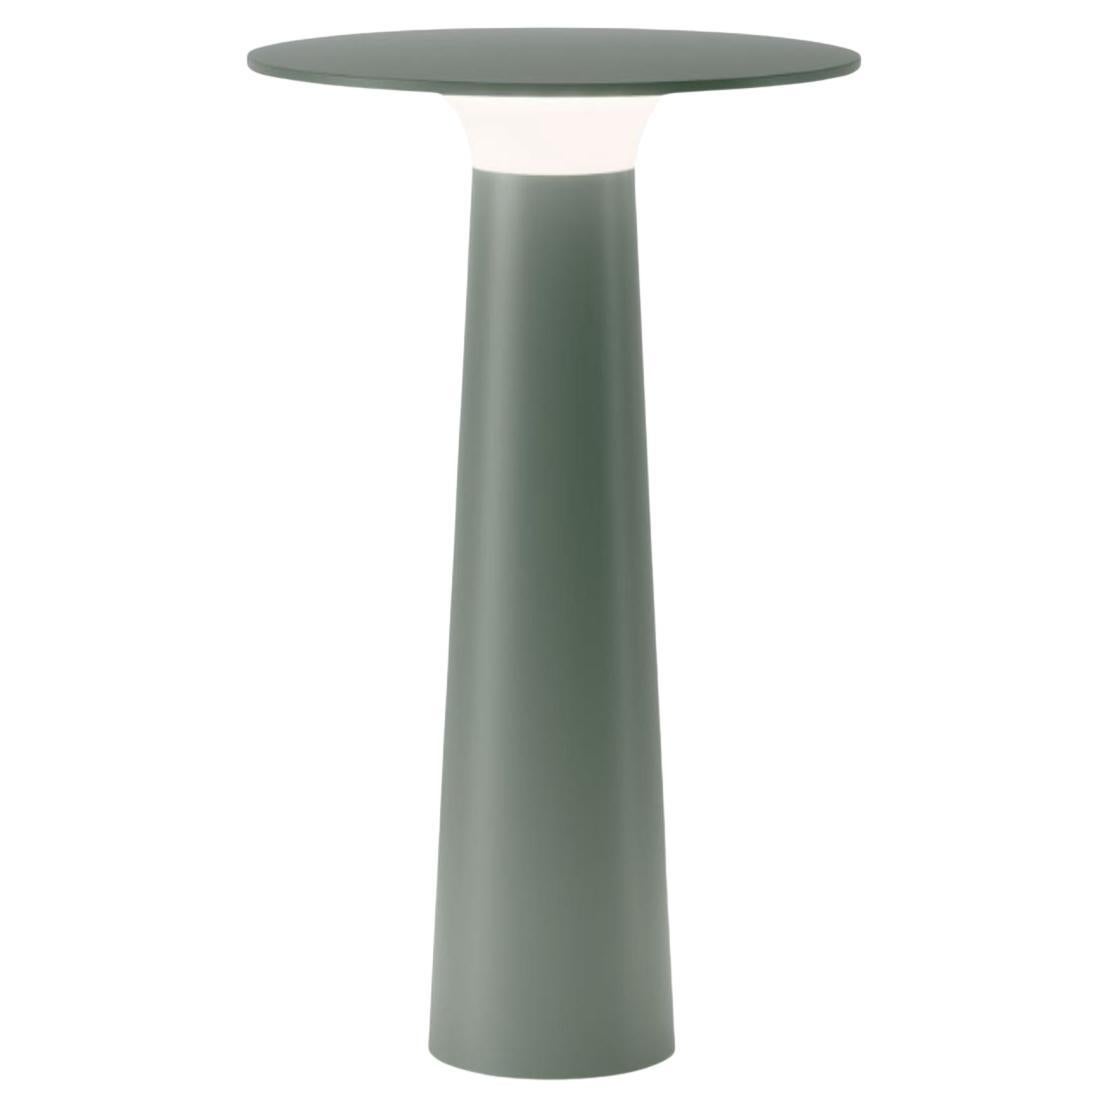 Klaus Nolting 'Lix' Portable Outdoor Aluminum Table Lamp in Sage for IP44de For Sale